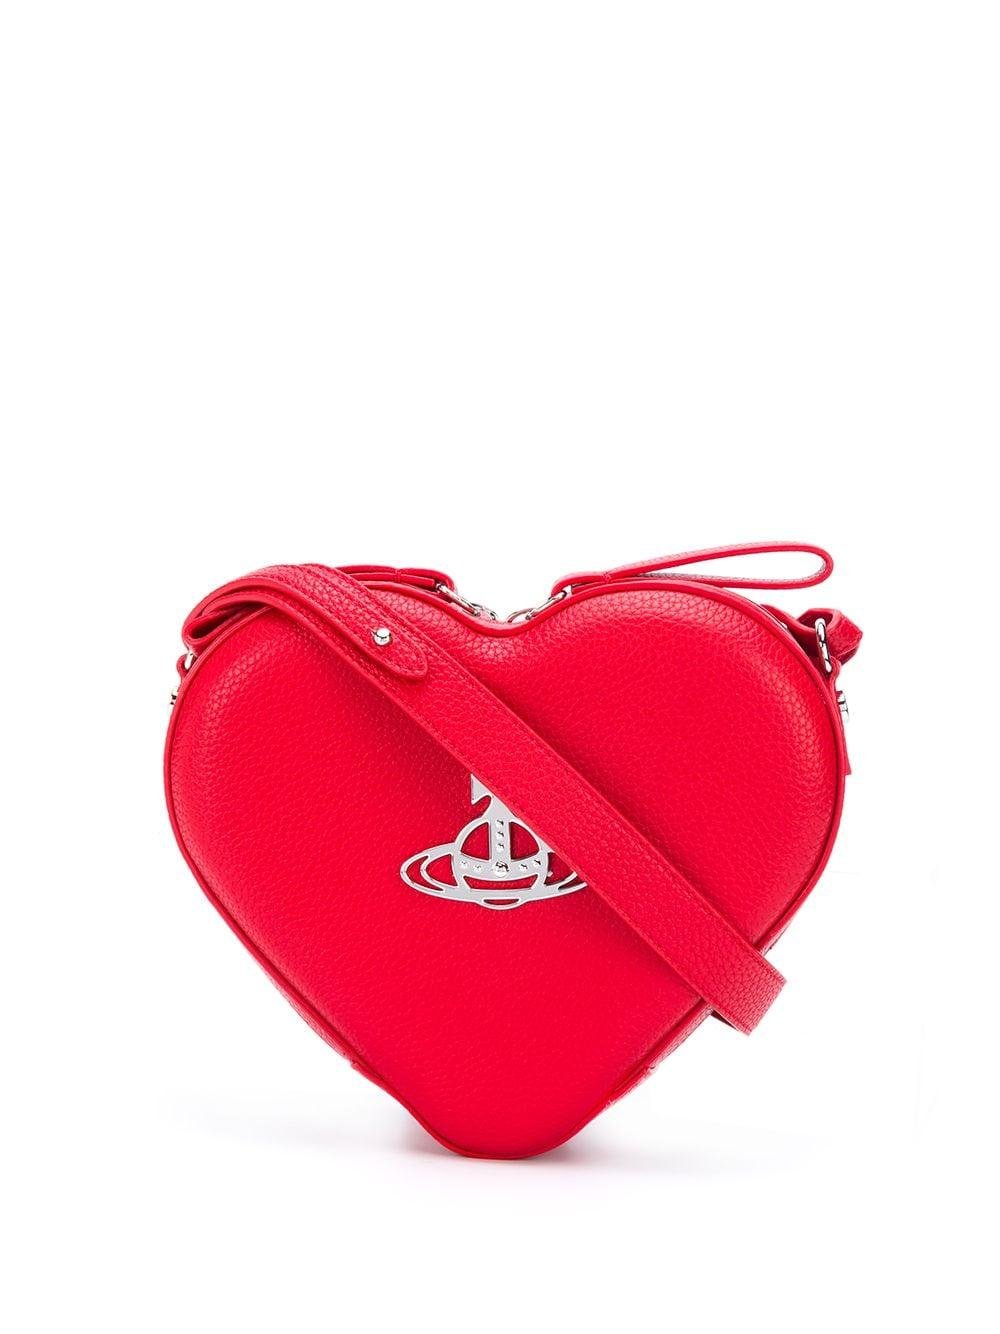 Vivienne Westwood Johanna Heart Crossbody Bag in Red